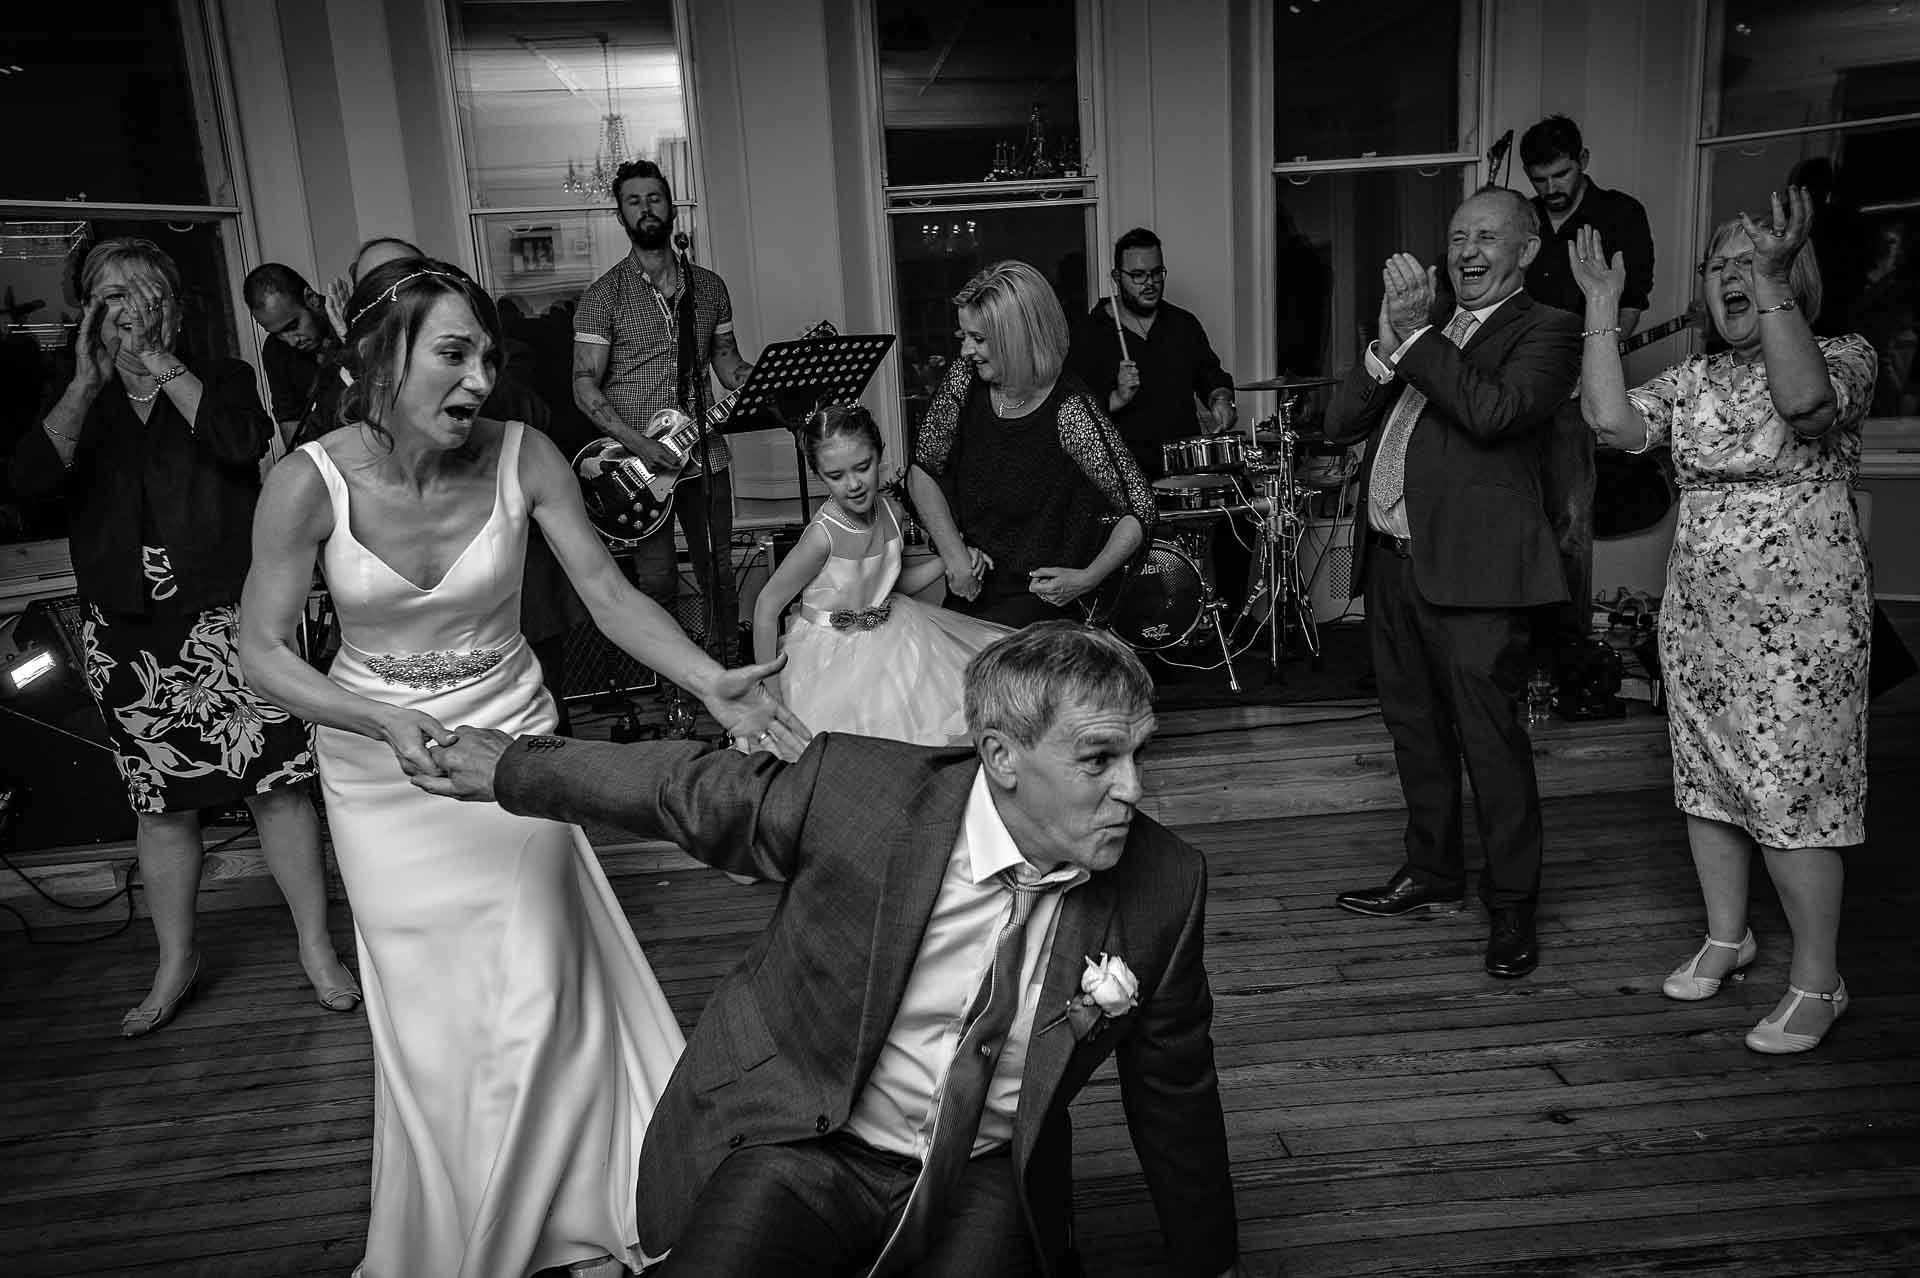 Man fallen on floor at wedding is helped up by bride